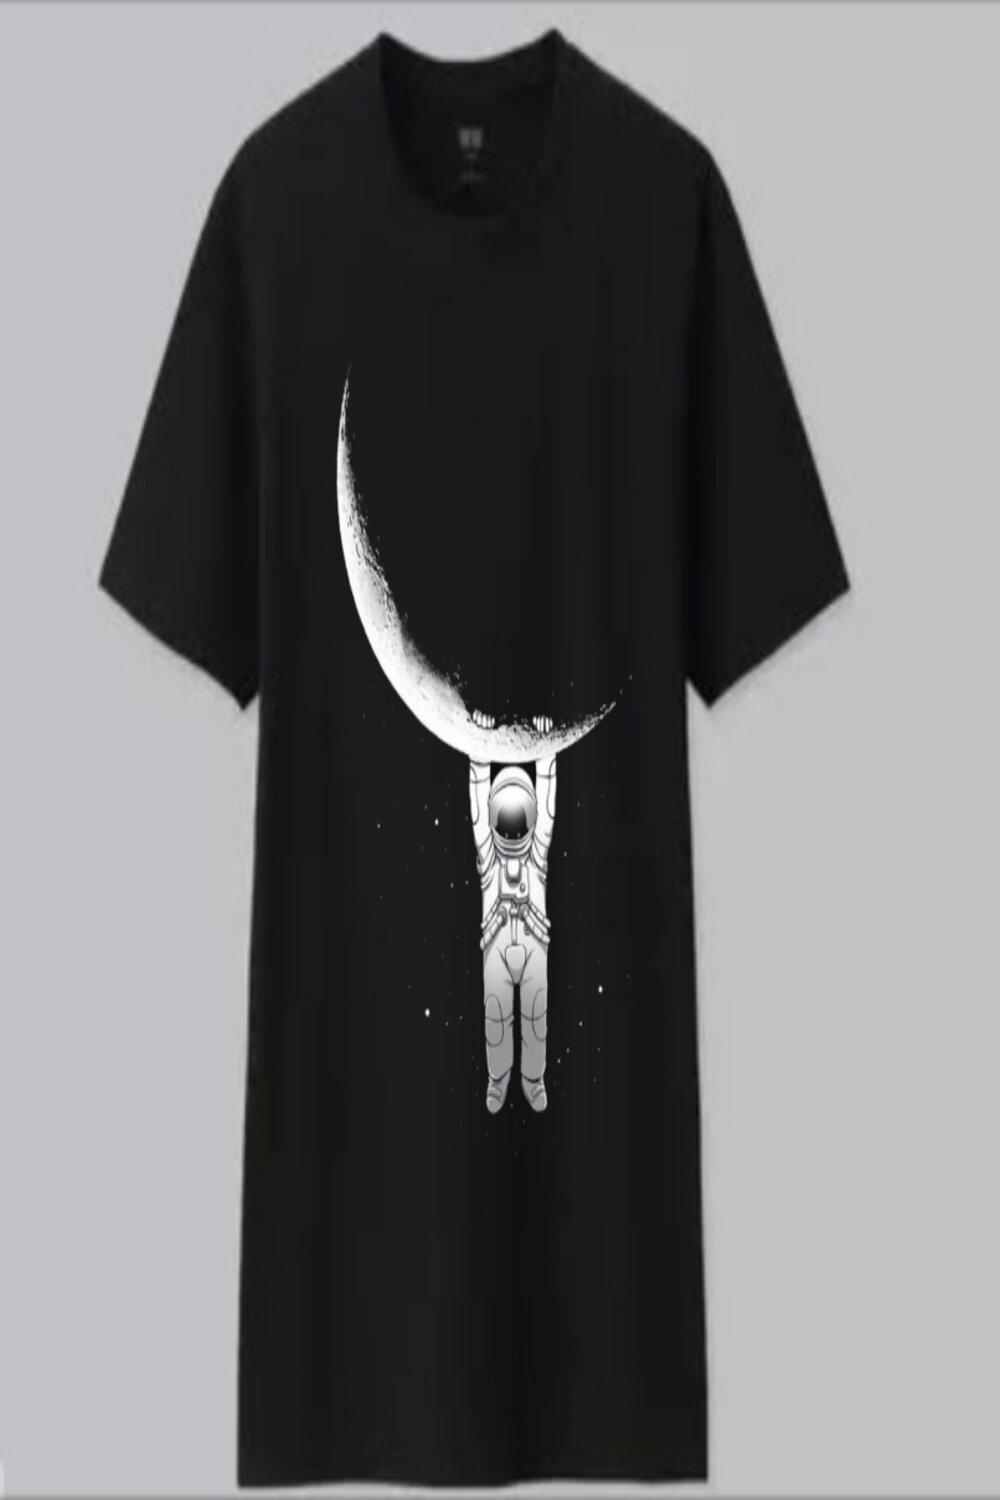 Astronaut hanging t-shirt design pinterest preview image.